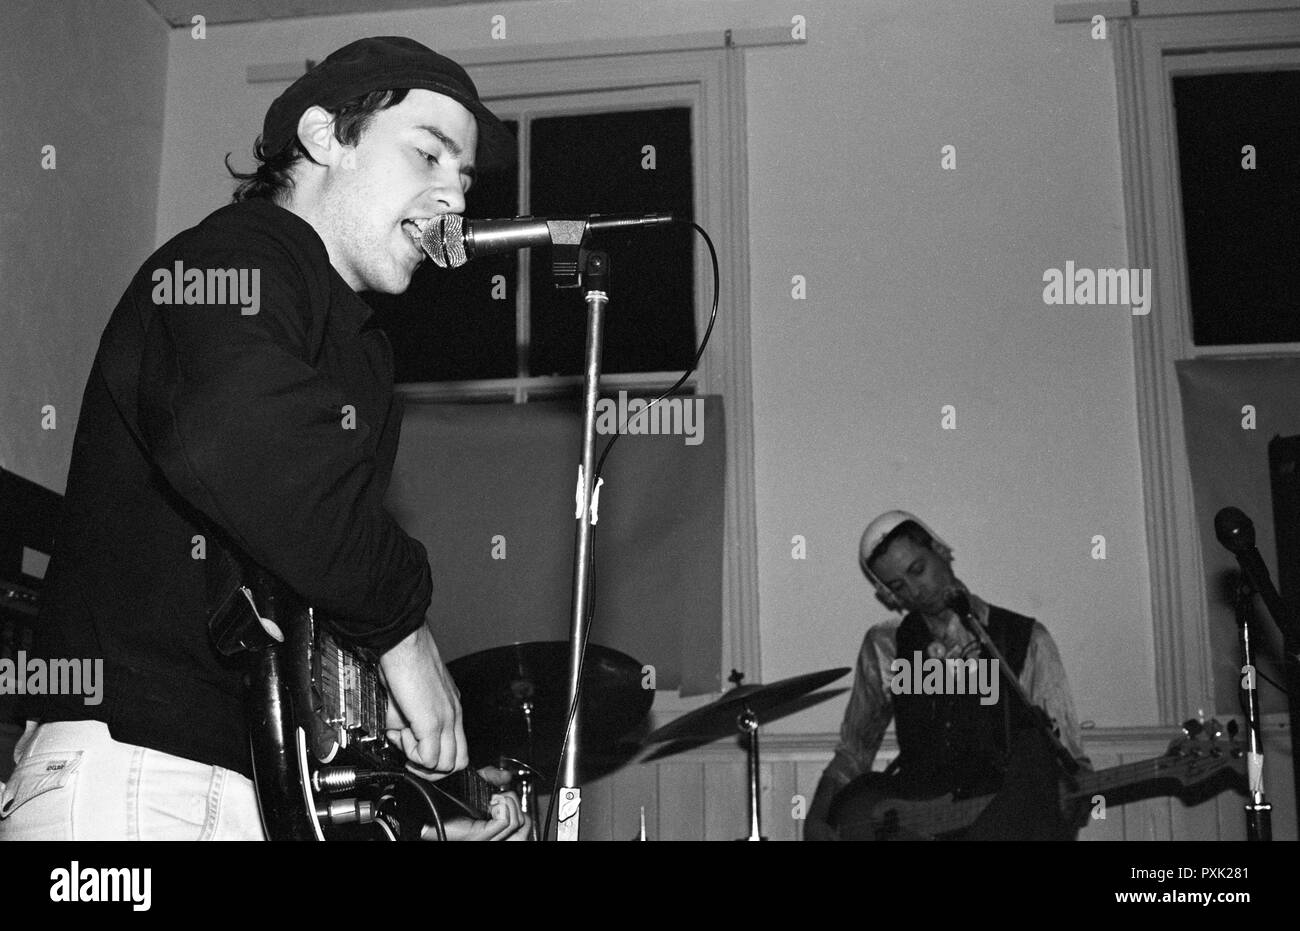 Dan Treacy und Jowe Head der Post-Punk-Band Television Personalities bei The Horse and Groom, Bedford, Großbritannien, Oktober 17th 1987. Stockfoto